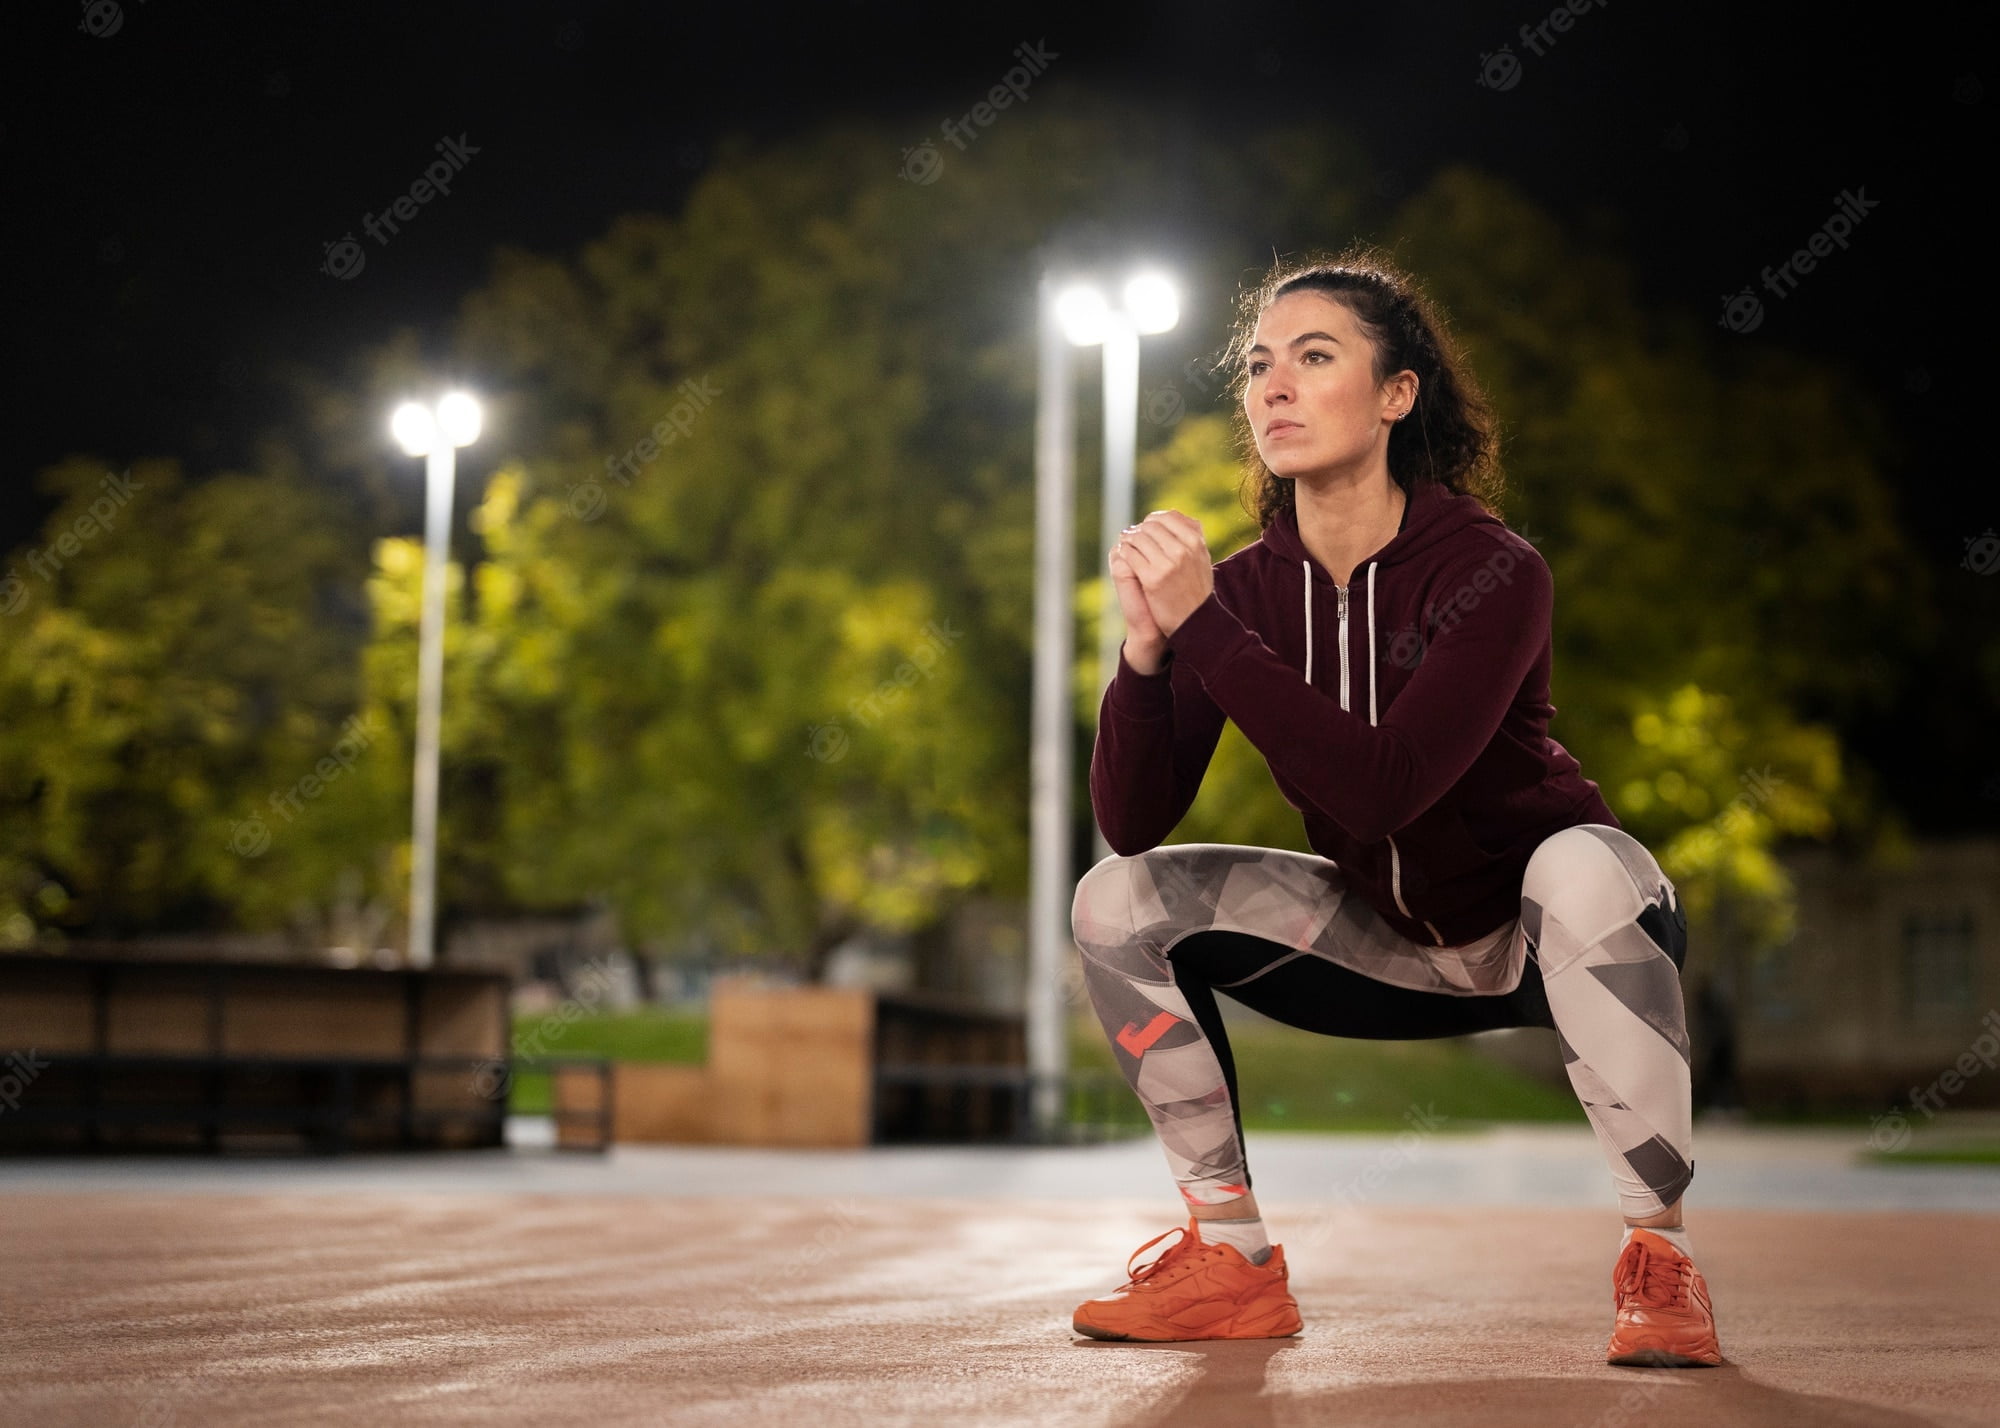 cardio vs squats